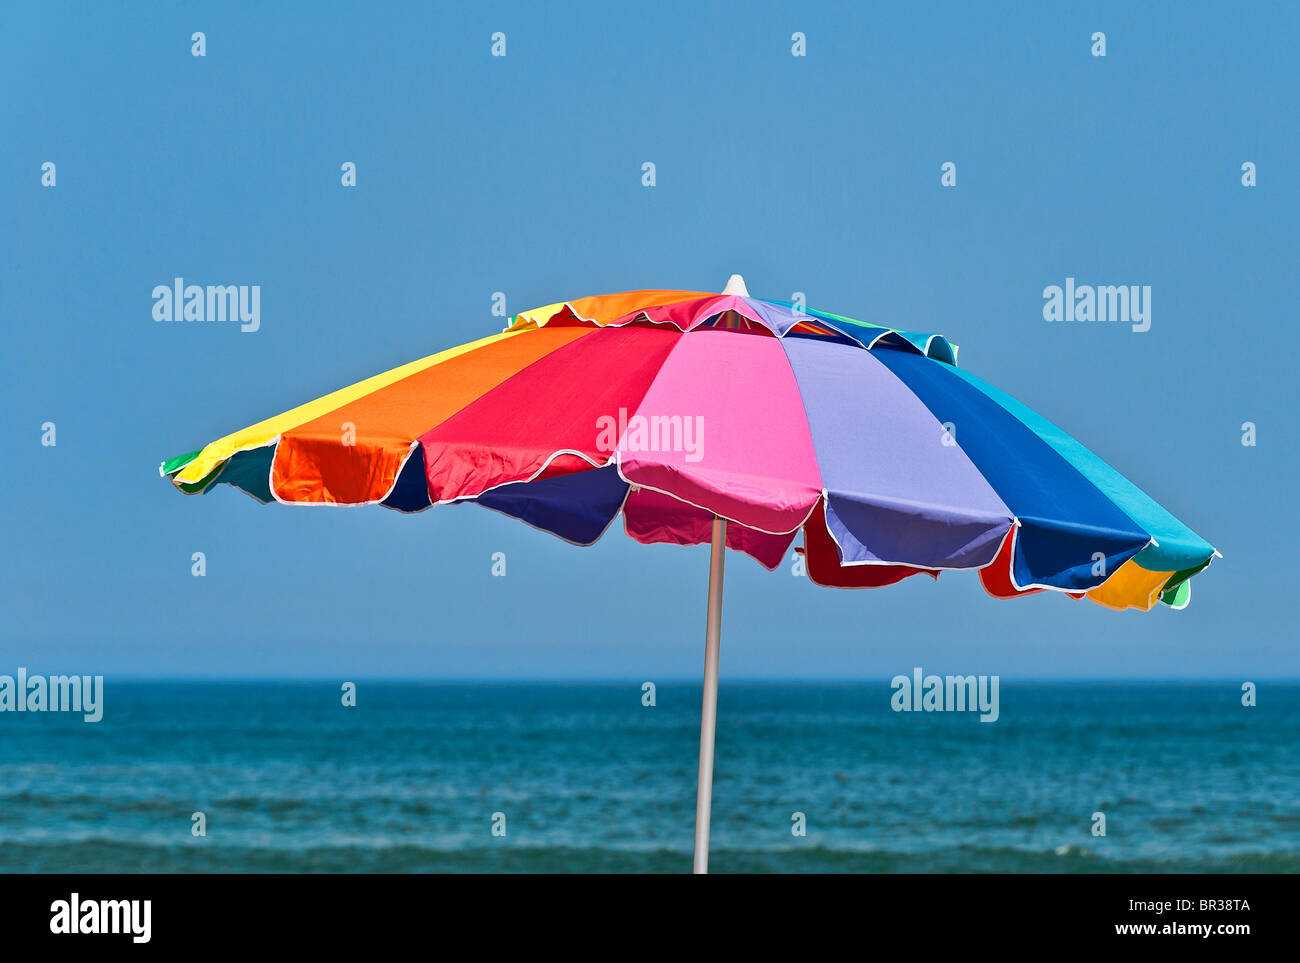 Strand Sonnenschirm Strandurlaub, Lizenzfreies Bild fsc-fyq